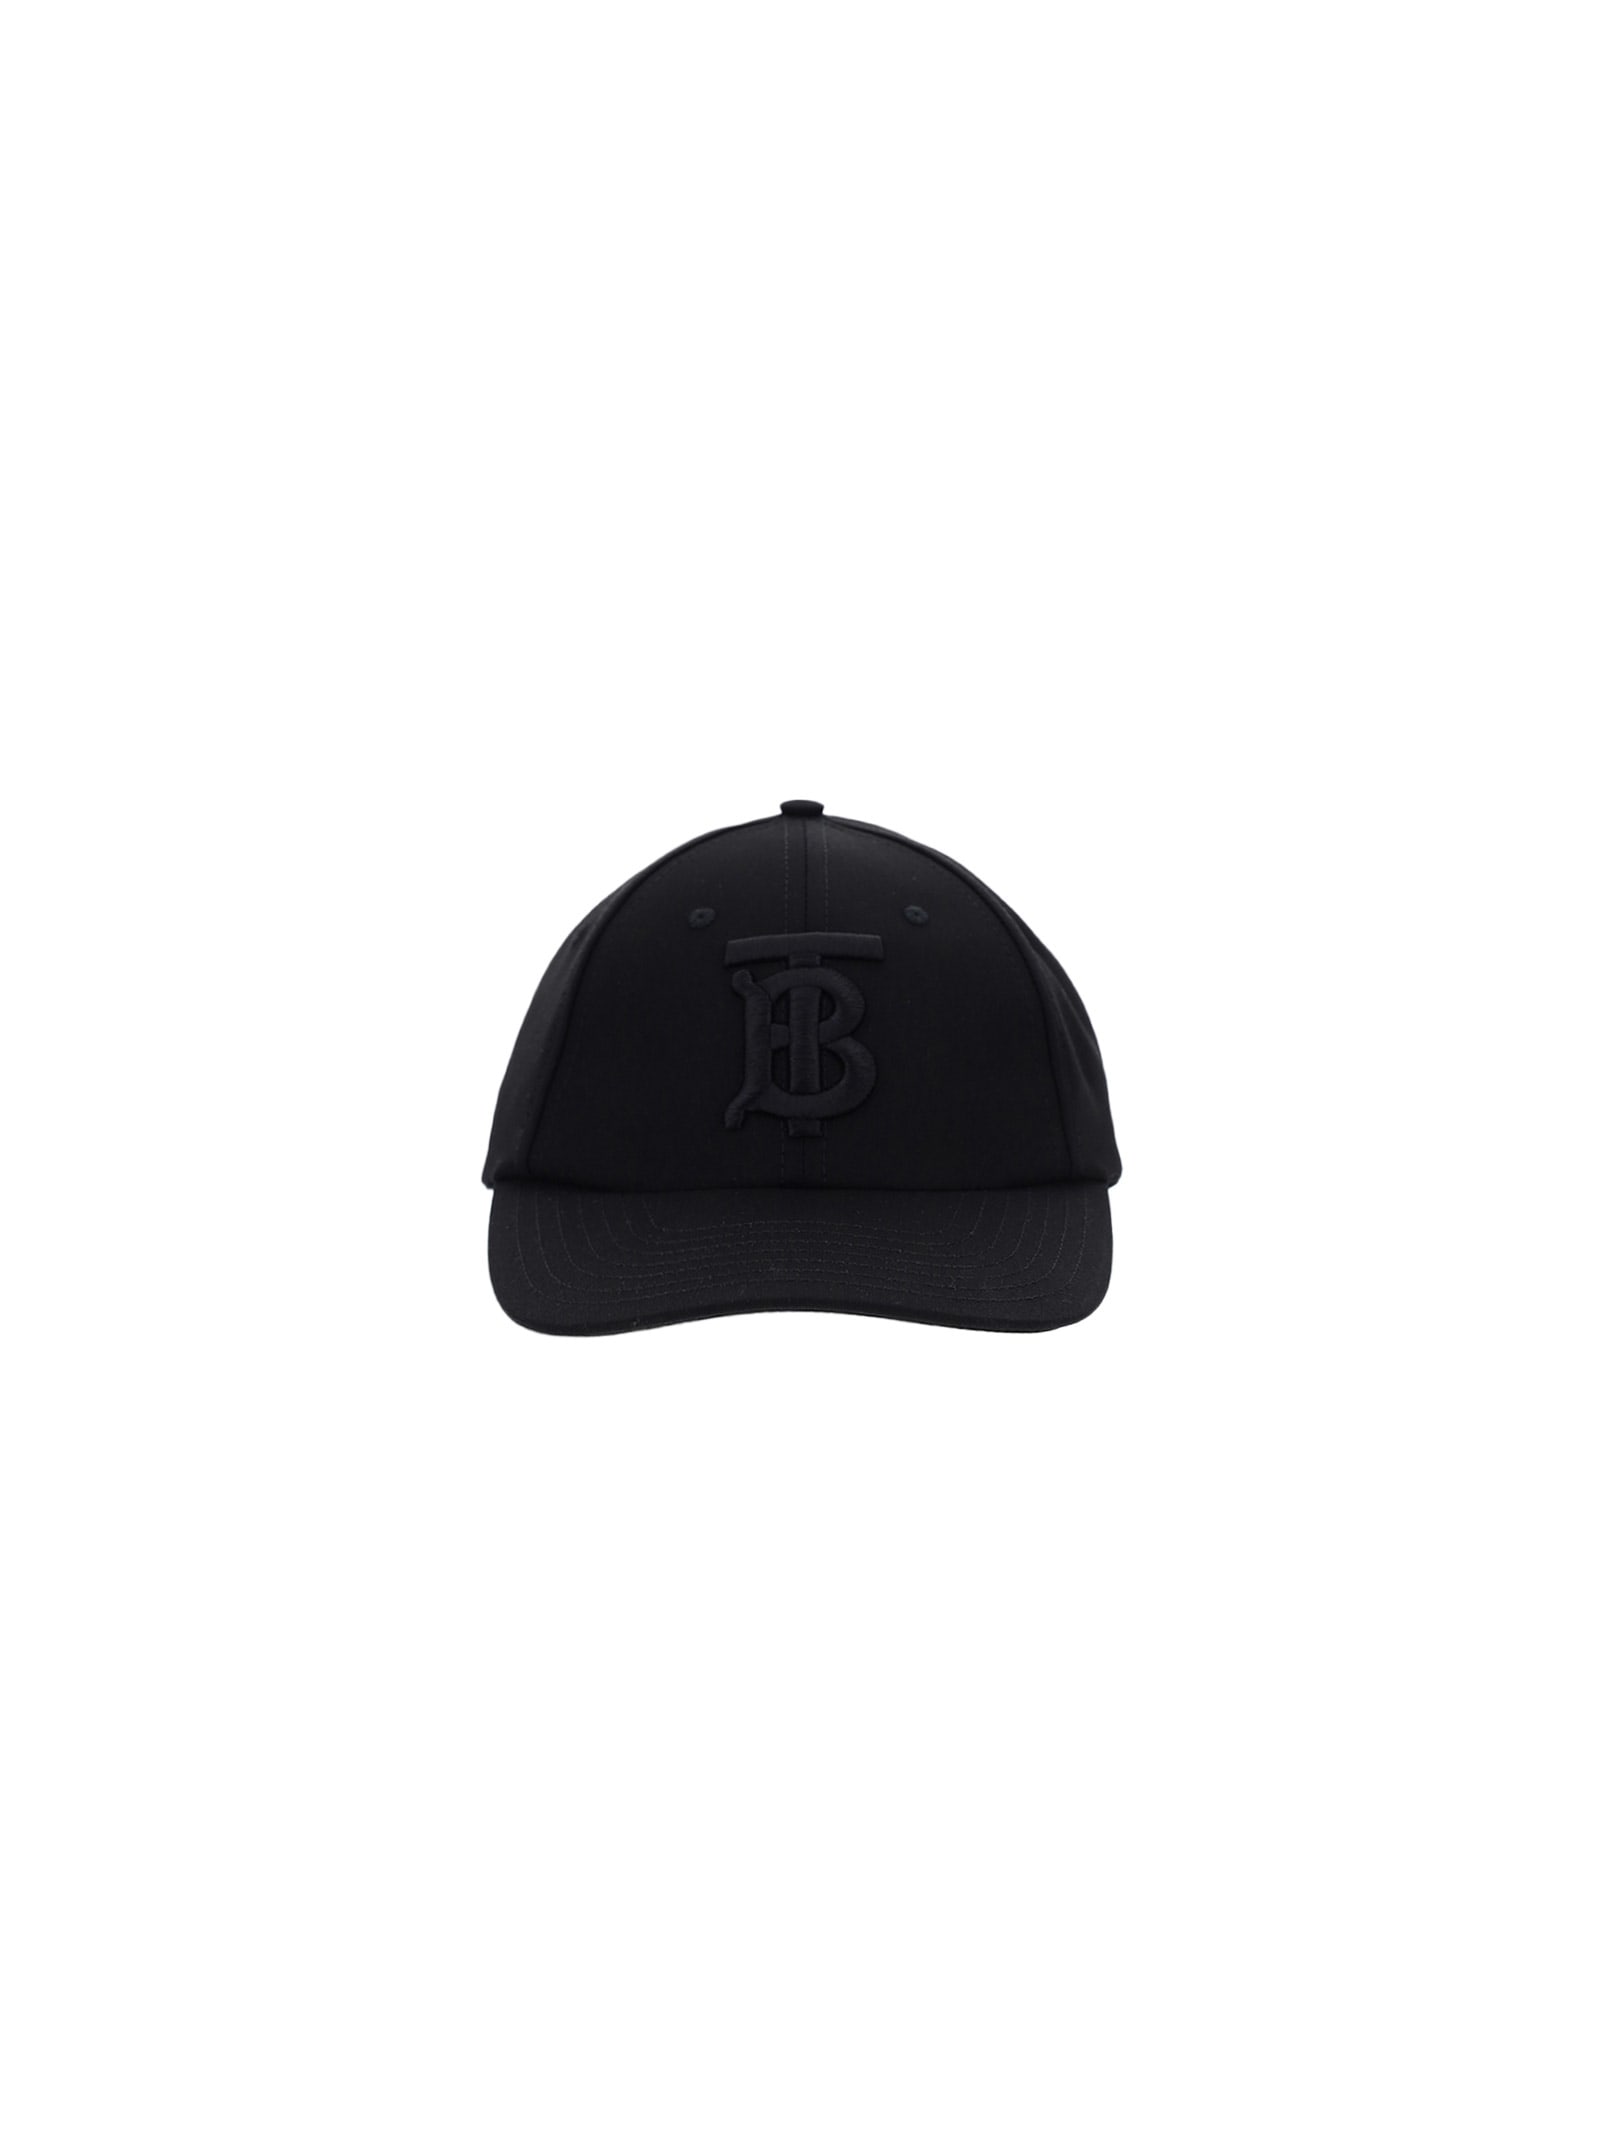 Burberry Baseball Cap